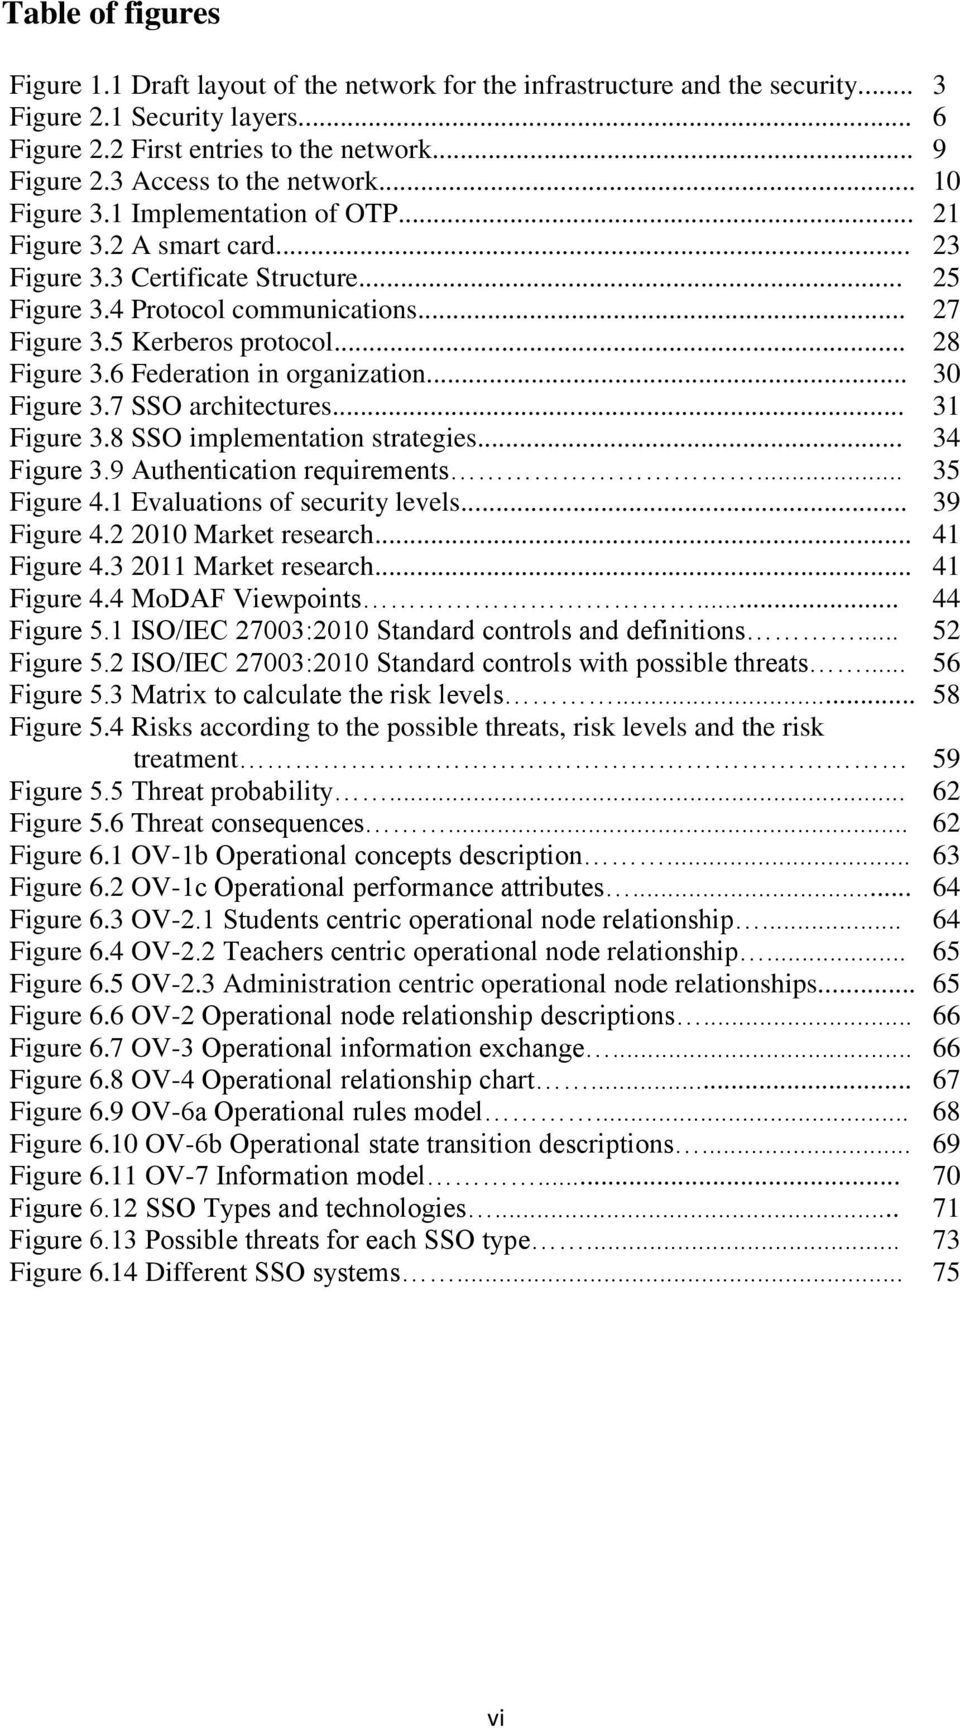 .. Figure 3.7 SSO architectures... Figure 3.8 SSO implementation strategies... Figure 3.9 Authentication requirements... Figure 4.1 Evaluations of security levels... Figure 4.2 2010 Market research.